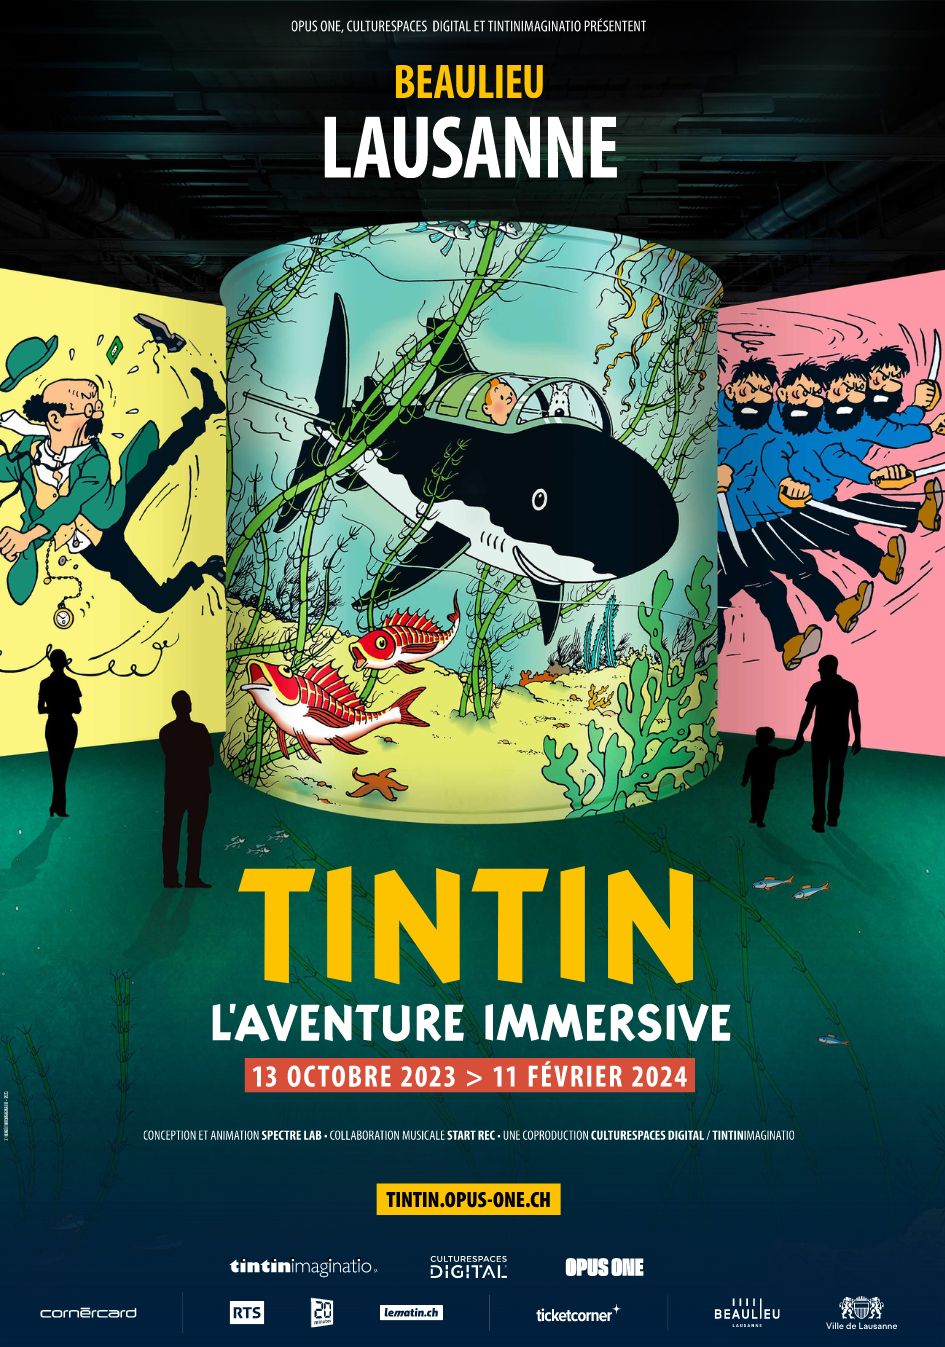 TINTIN, L'AVENTURE IMMERSIVE